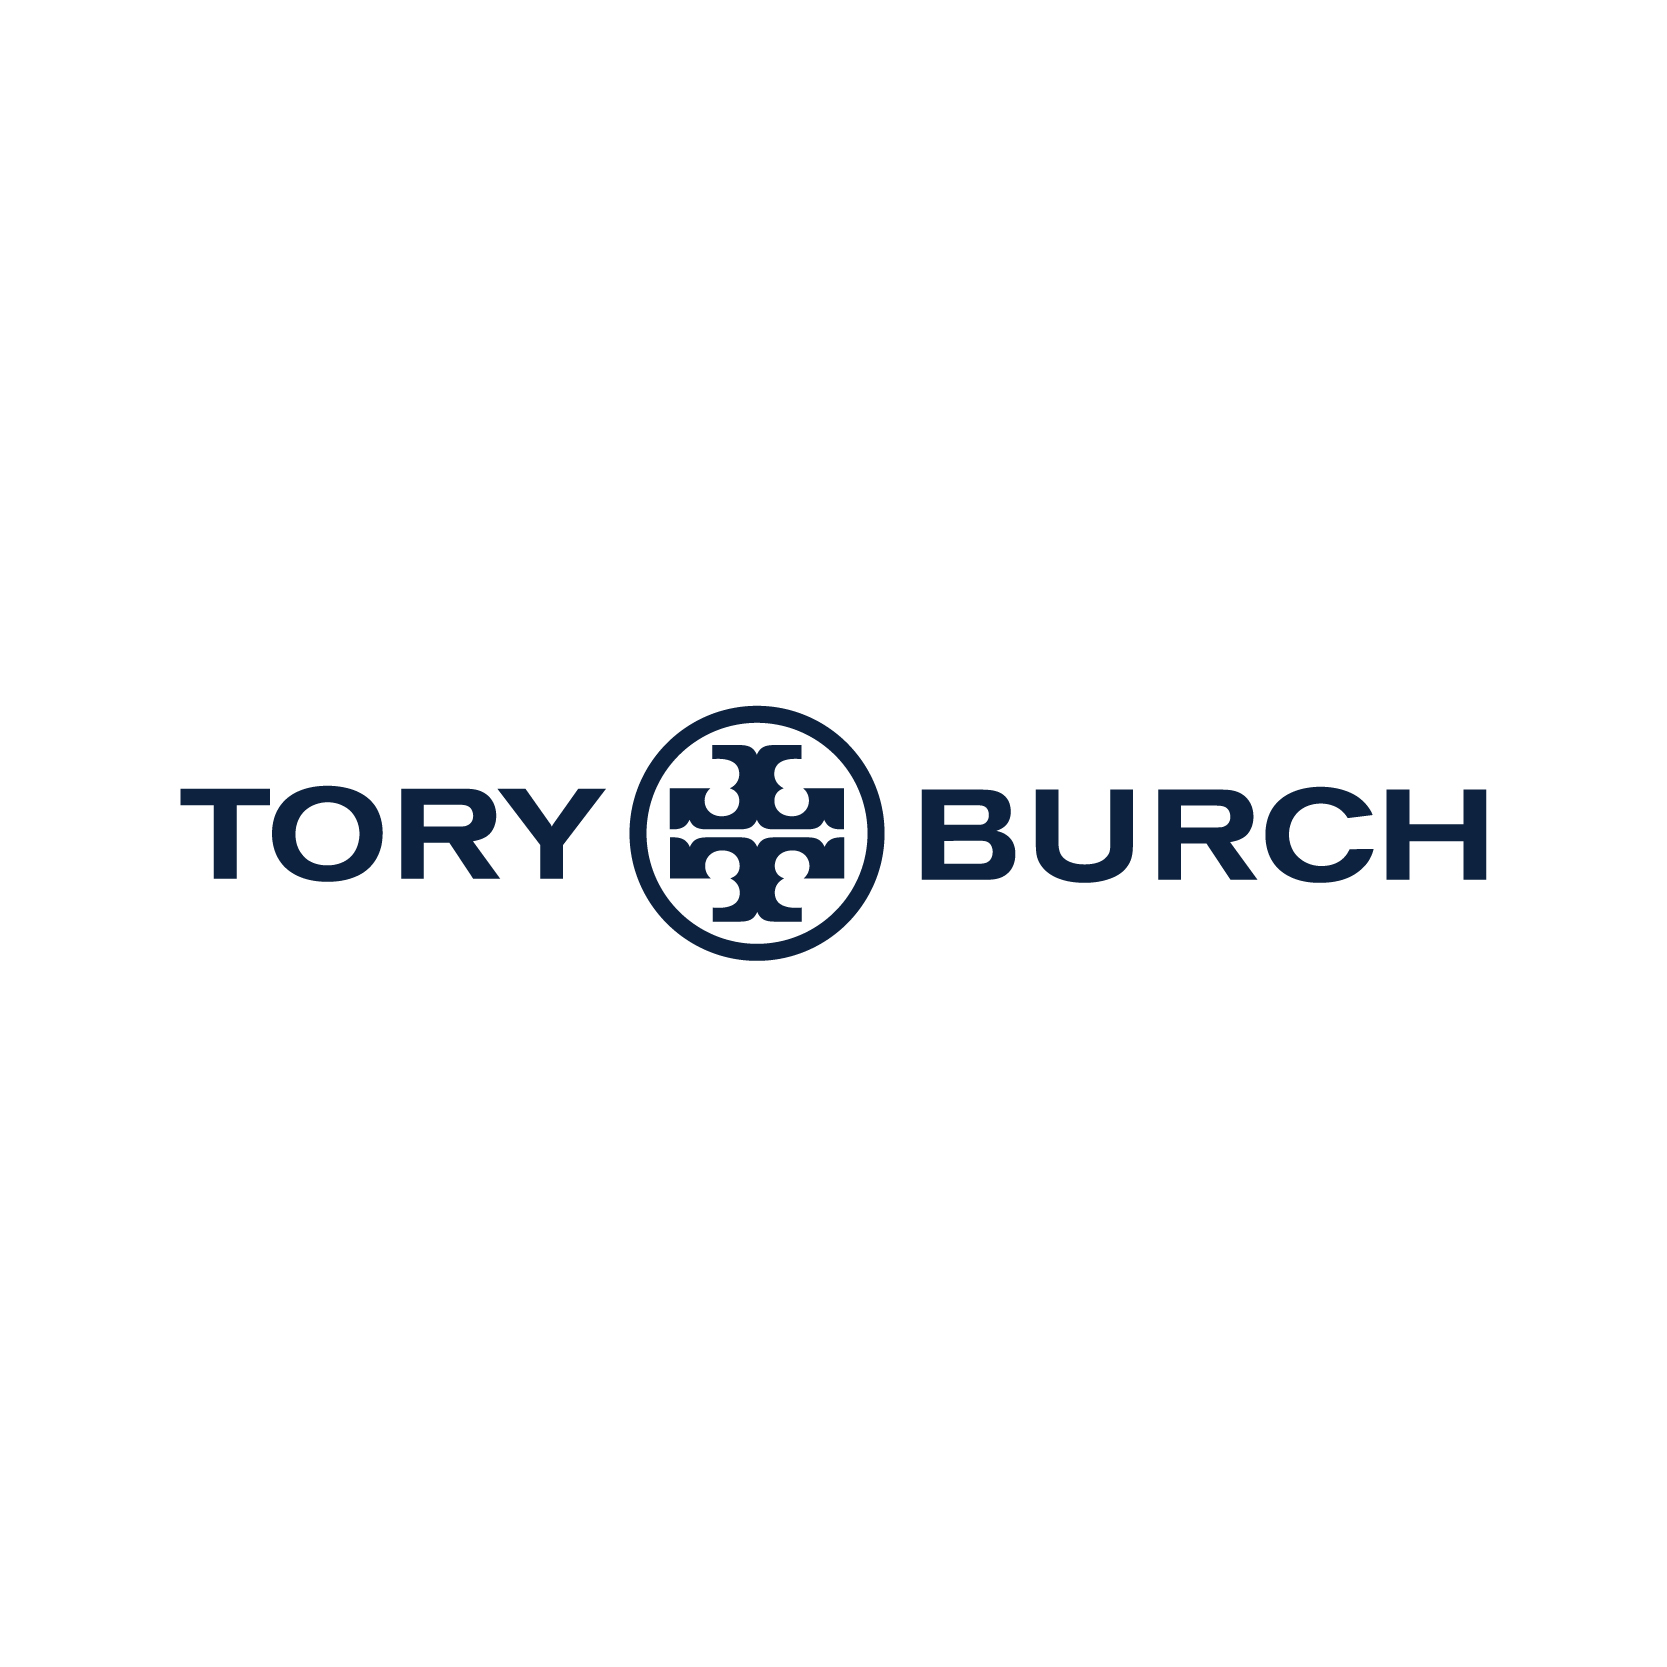 Tory Burch cupons 